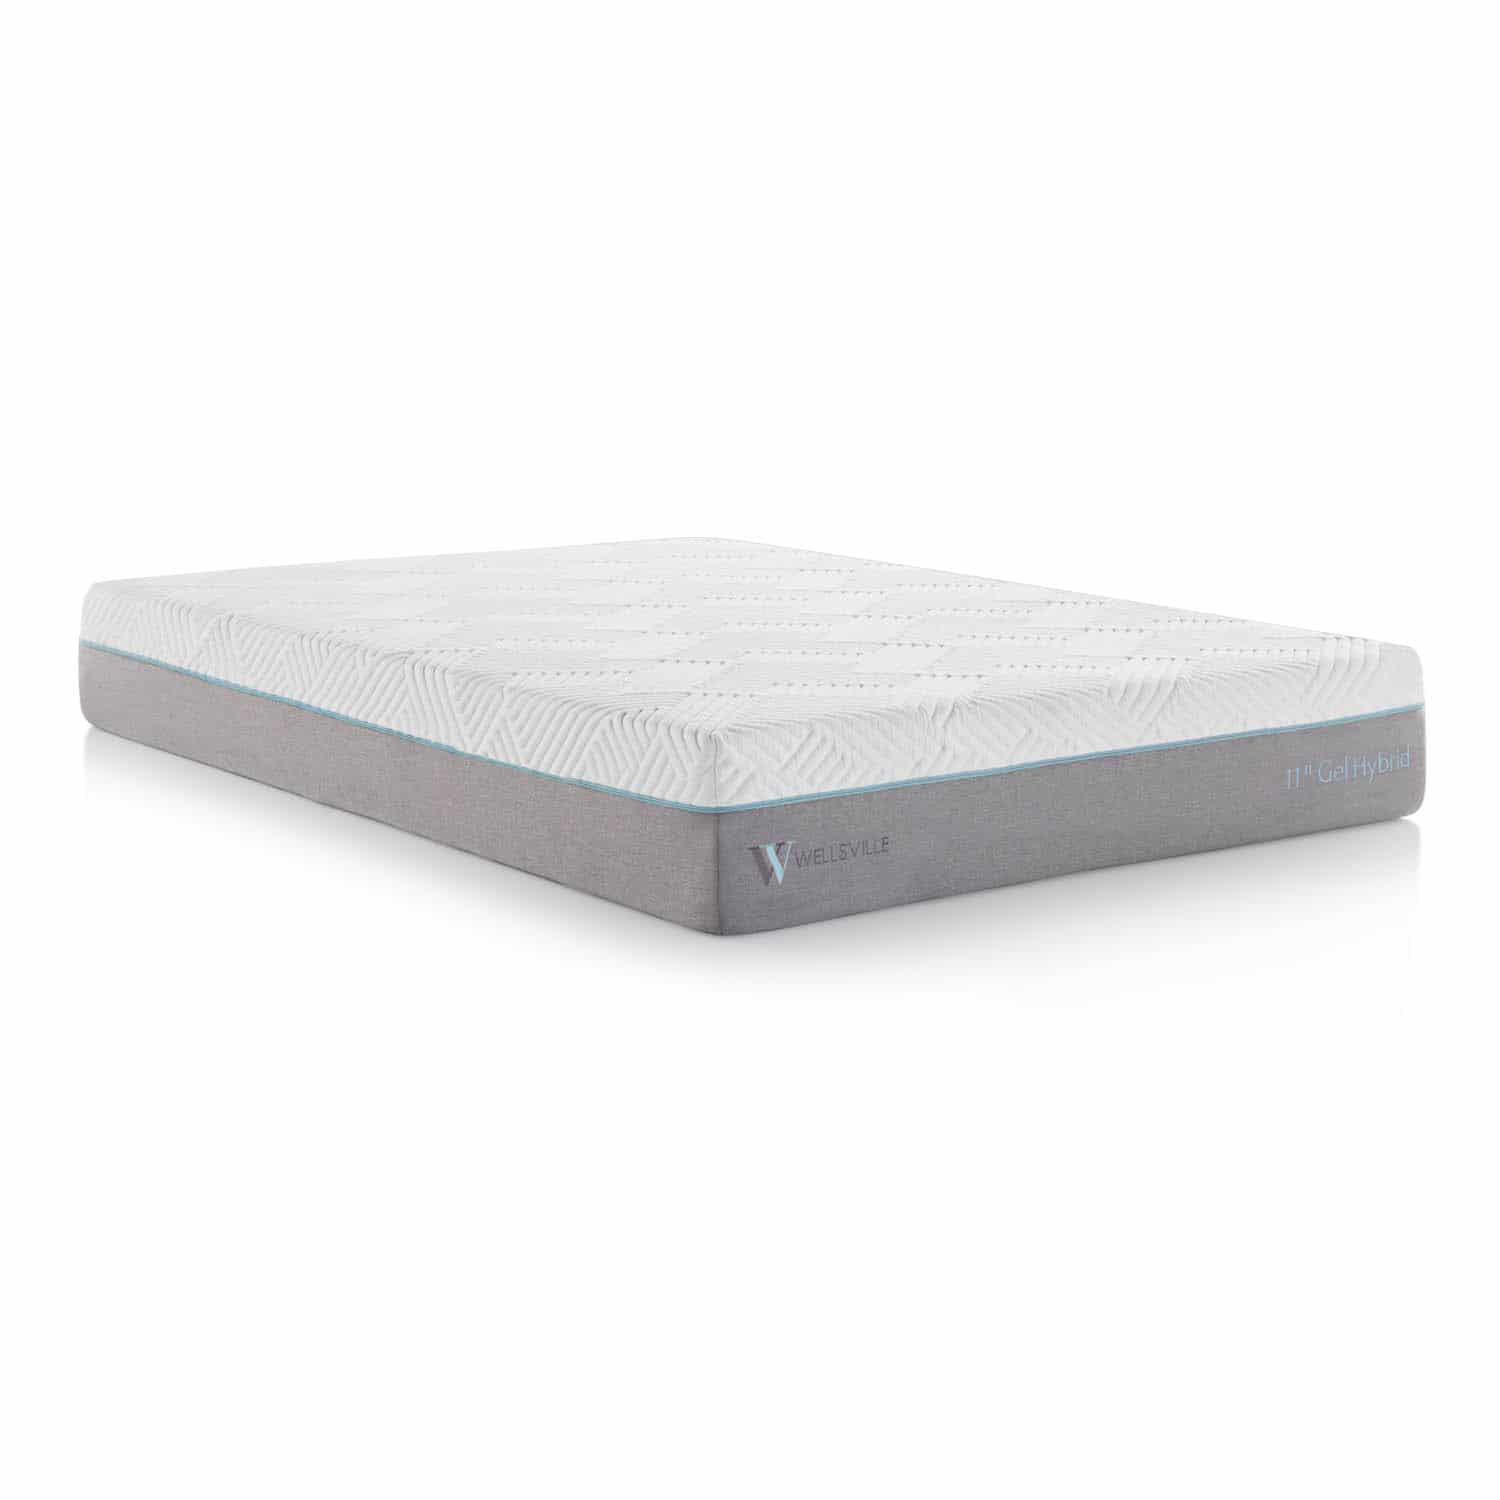 Photo of a gel hybrid mattress on a white background